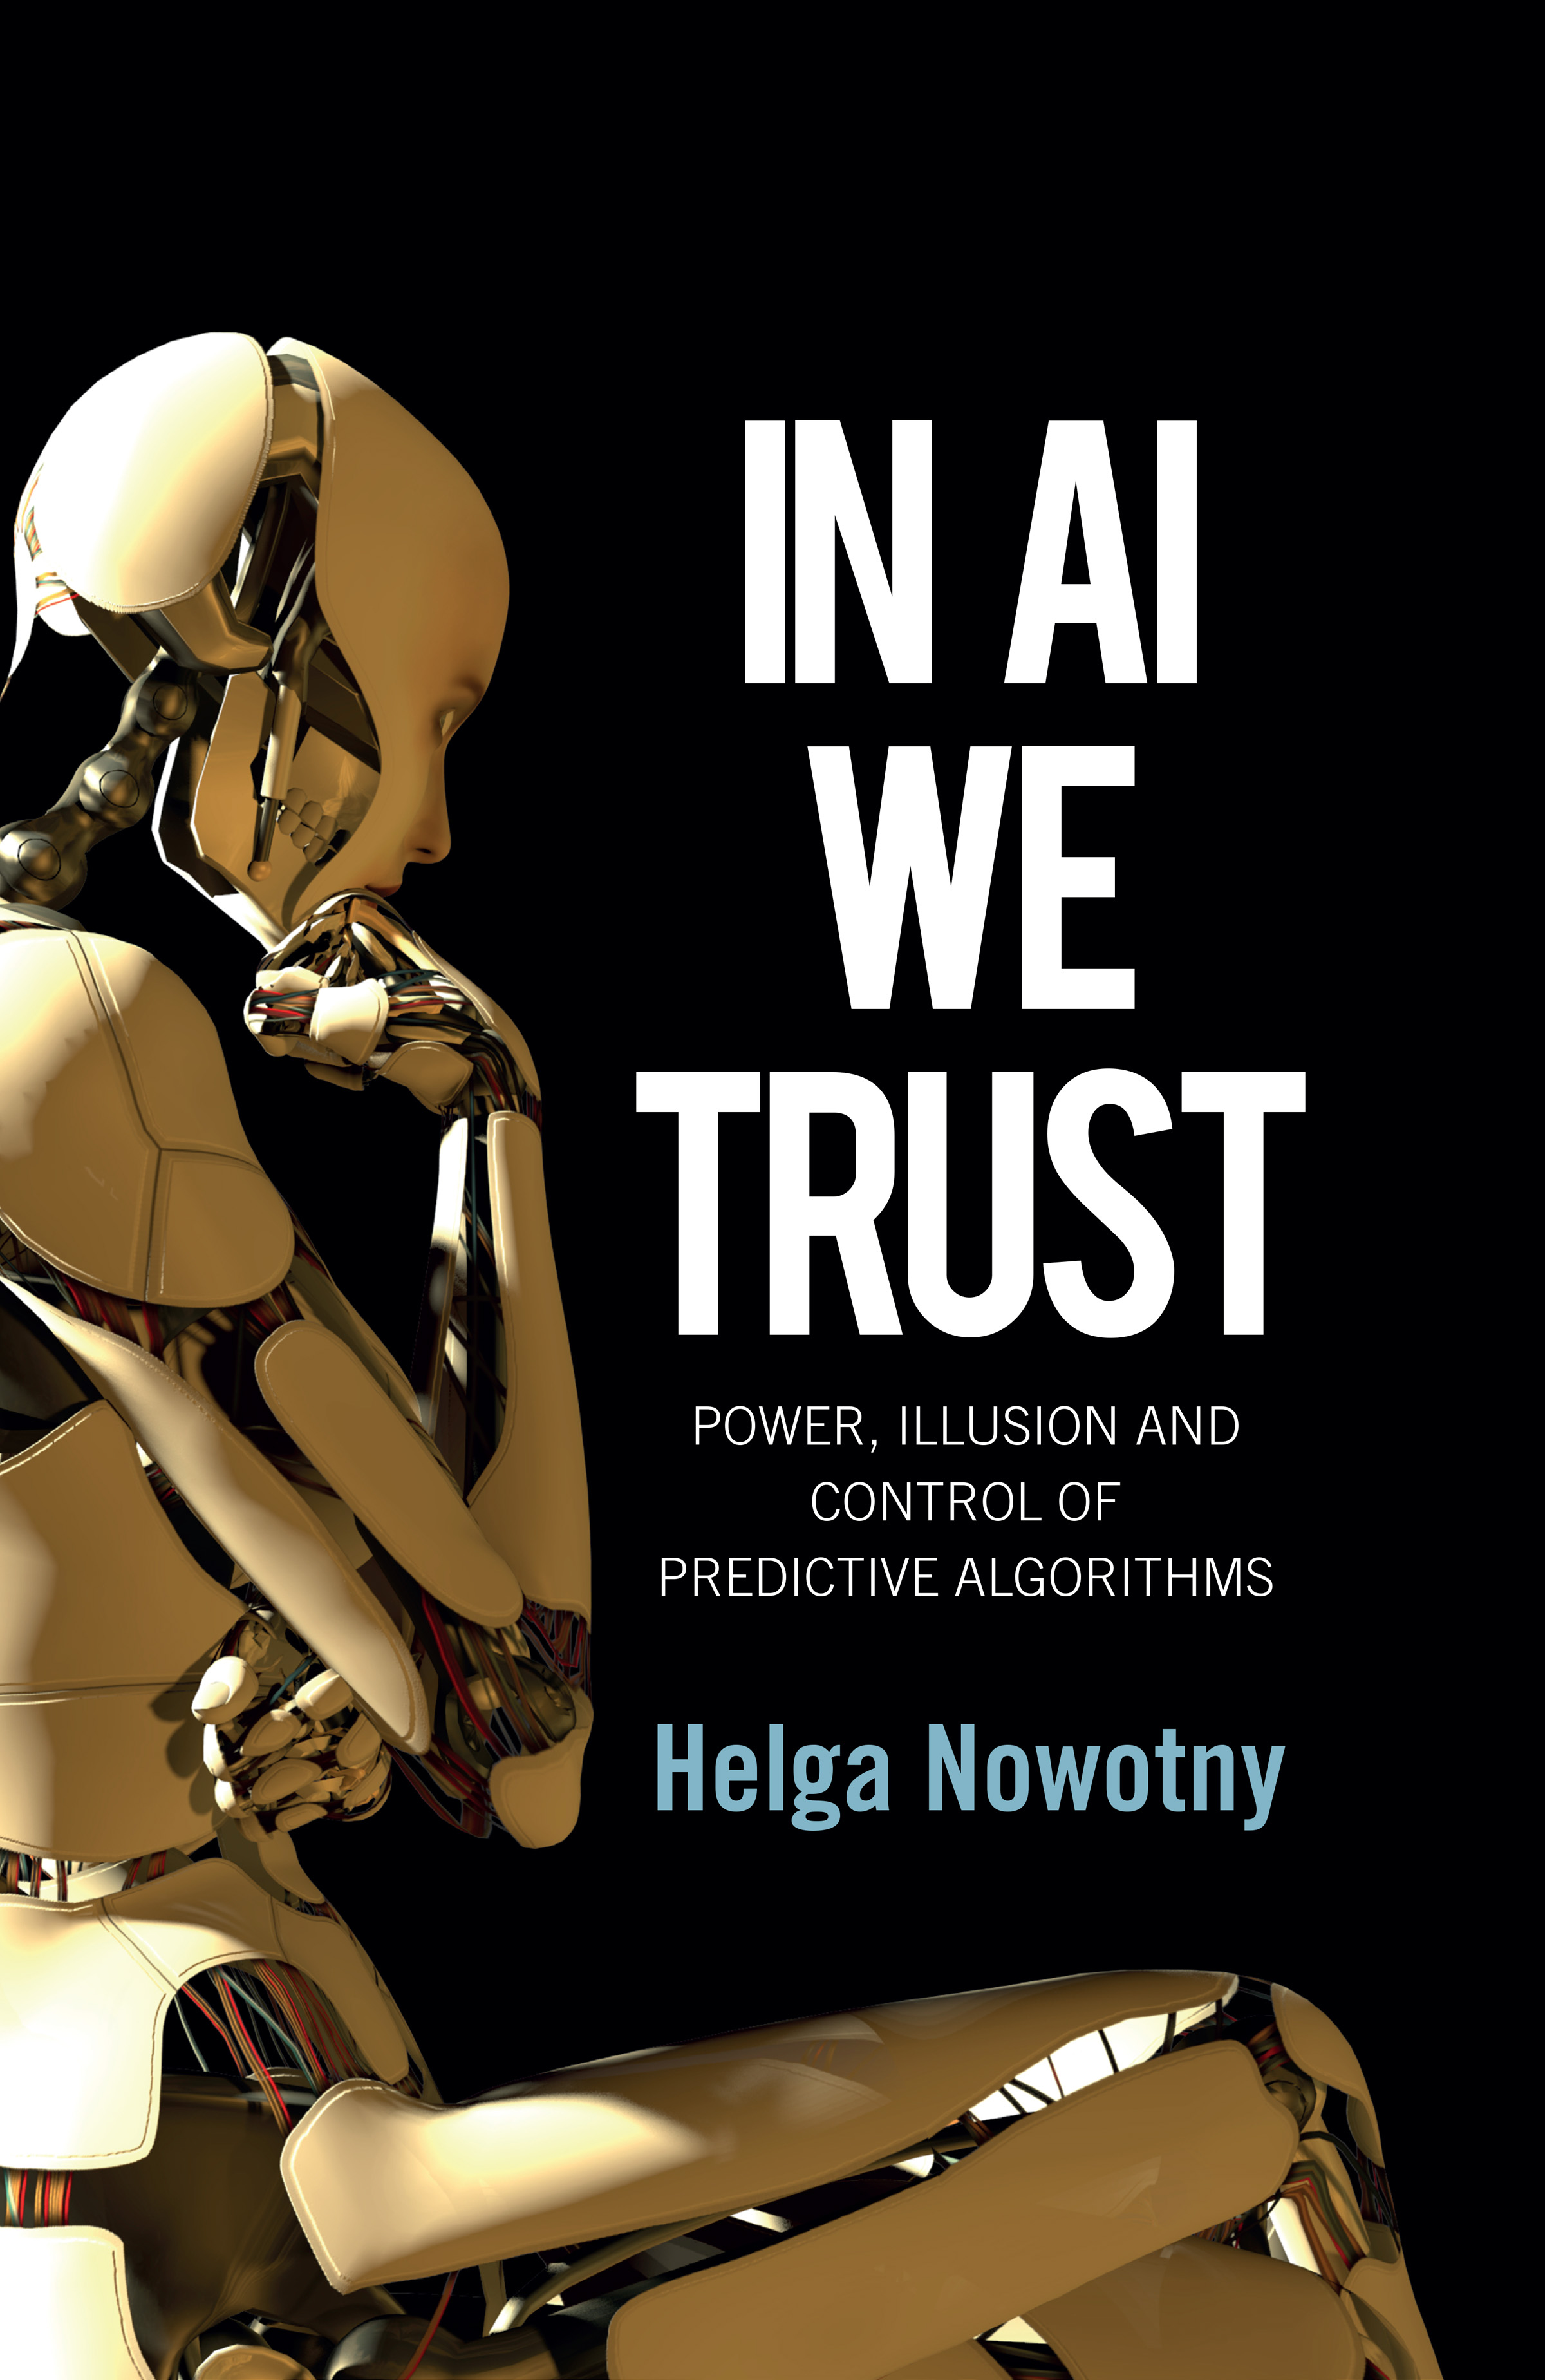 In AI We Trust
Power, Illusion and Control of Predictive Algorithms
